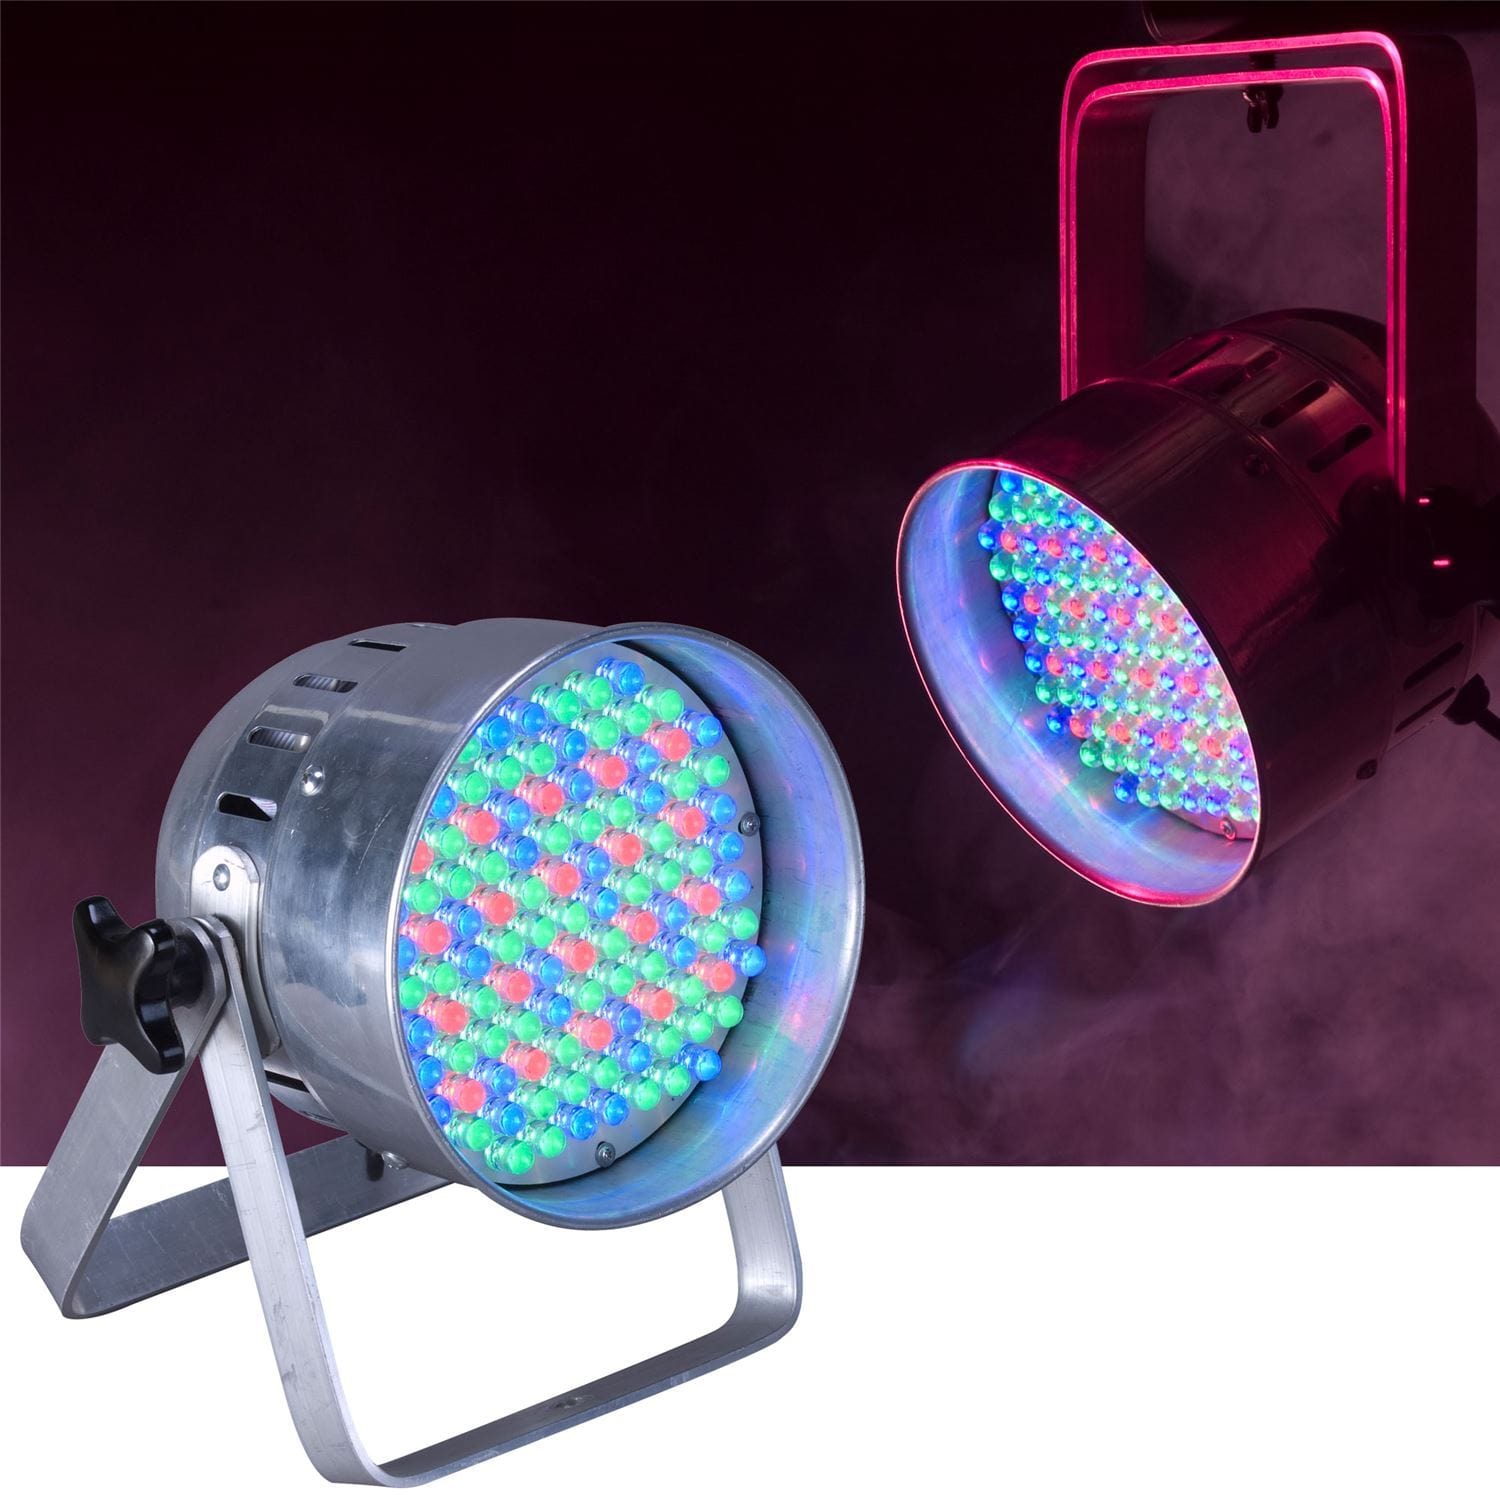 Eliminator Electro 56 LED RGB Par Can - ProSound and Stage Lighting